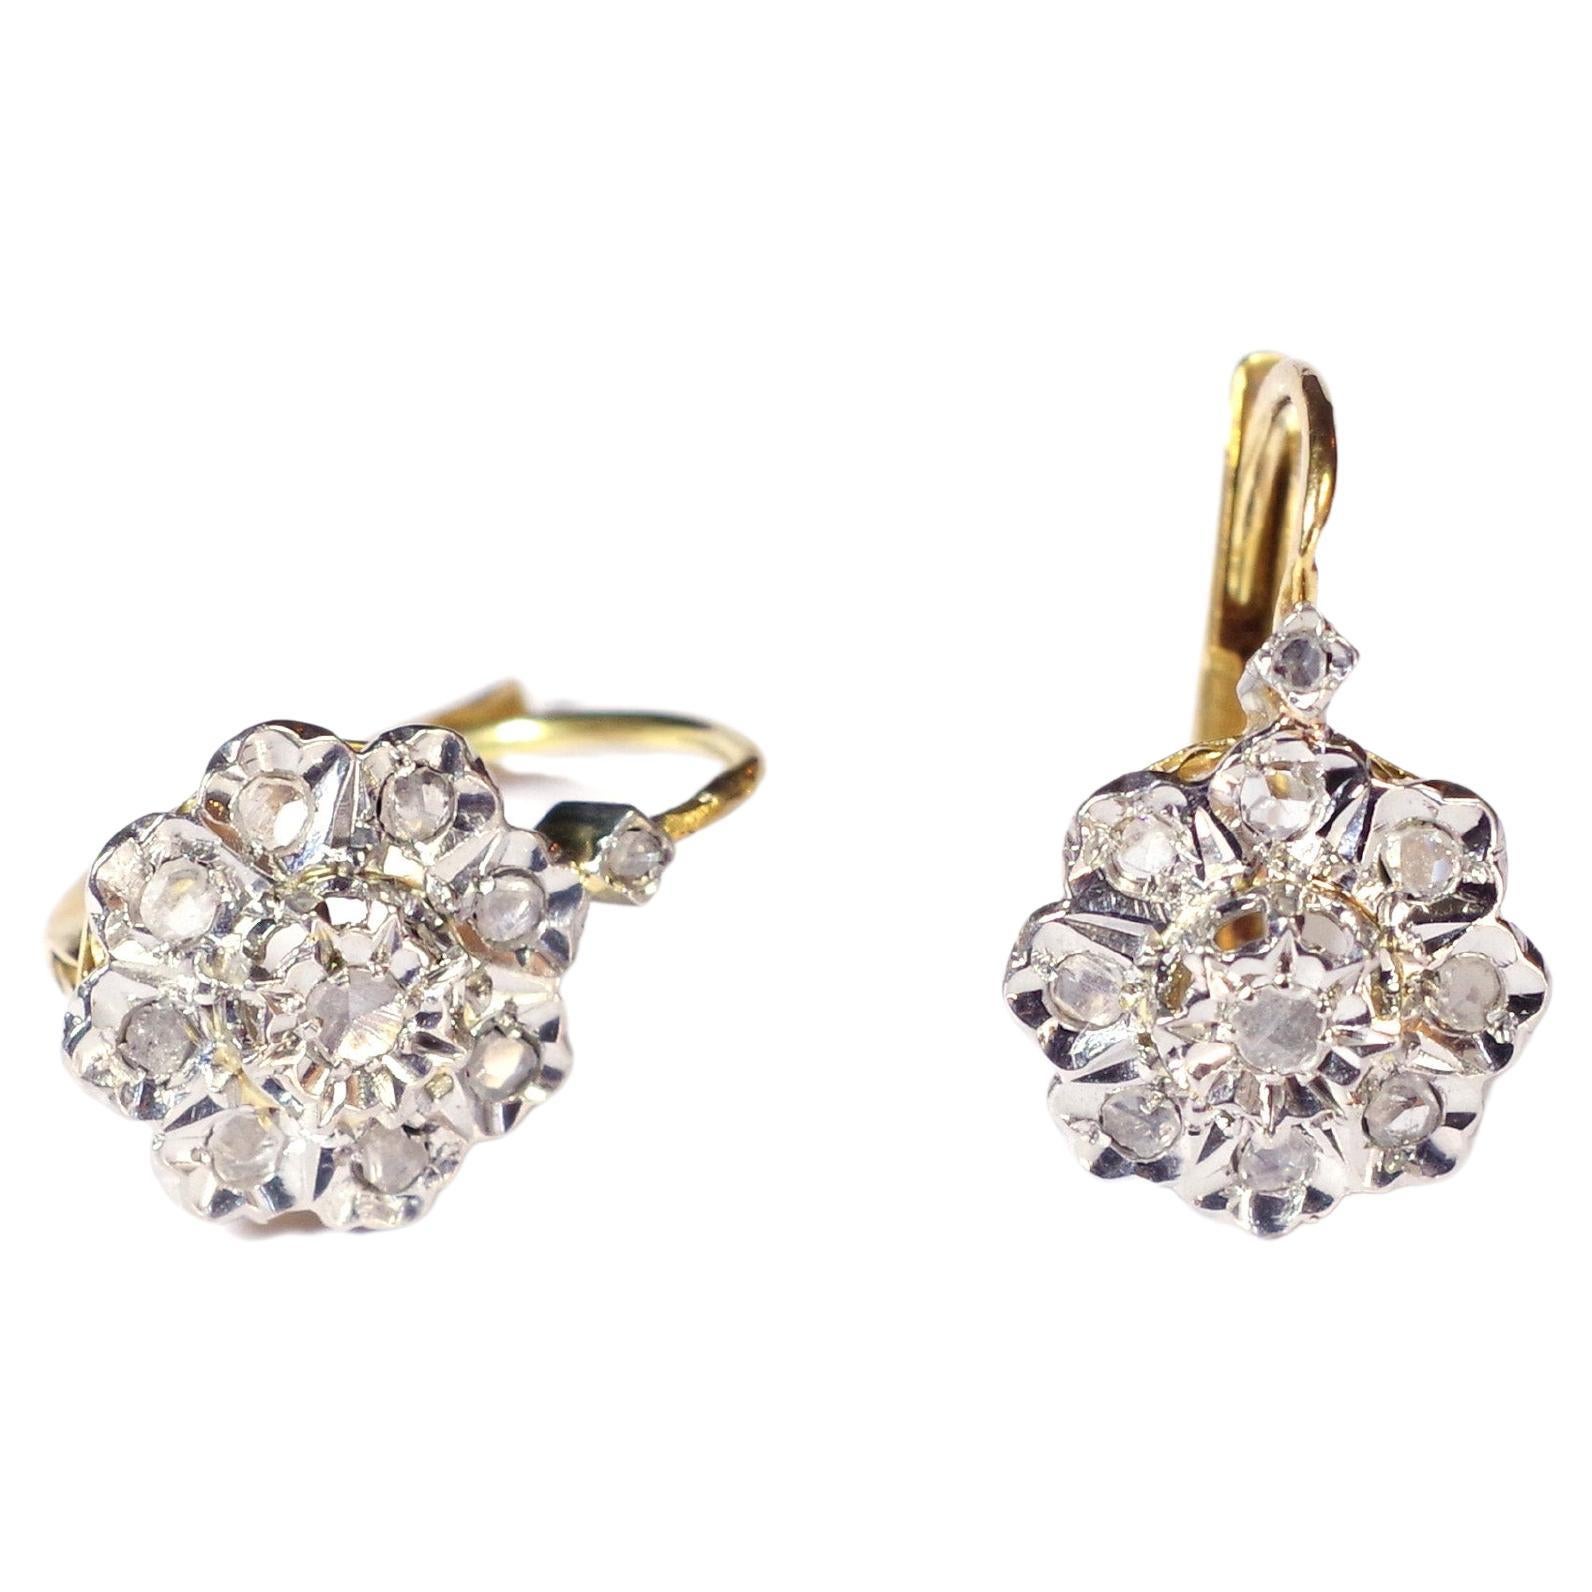 Belle Epoque diamond earrings in 18 karat yellow gold and platinum